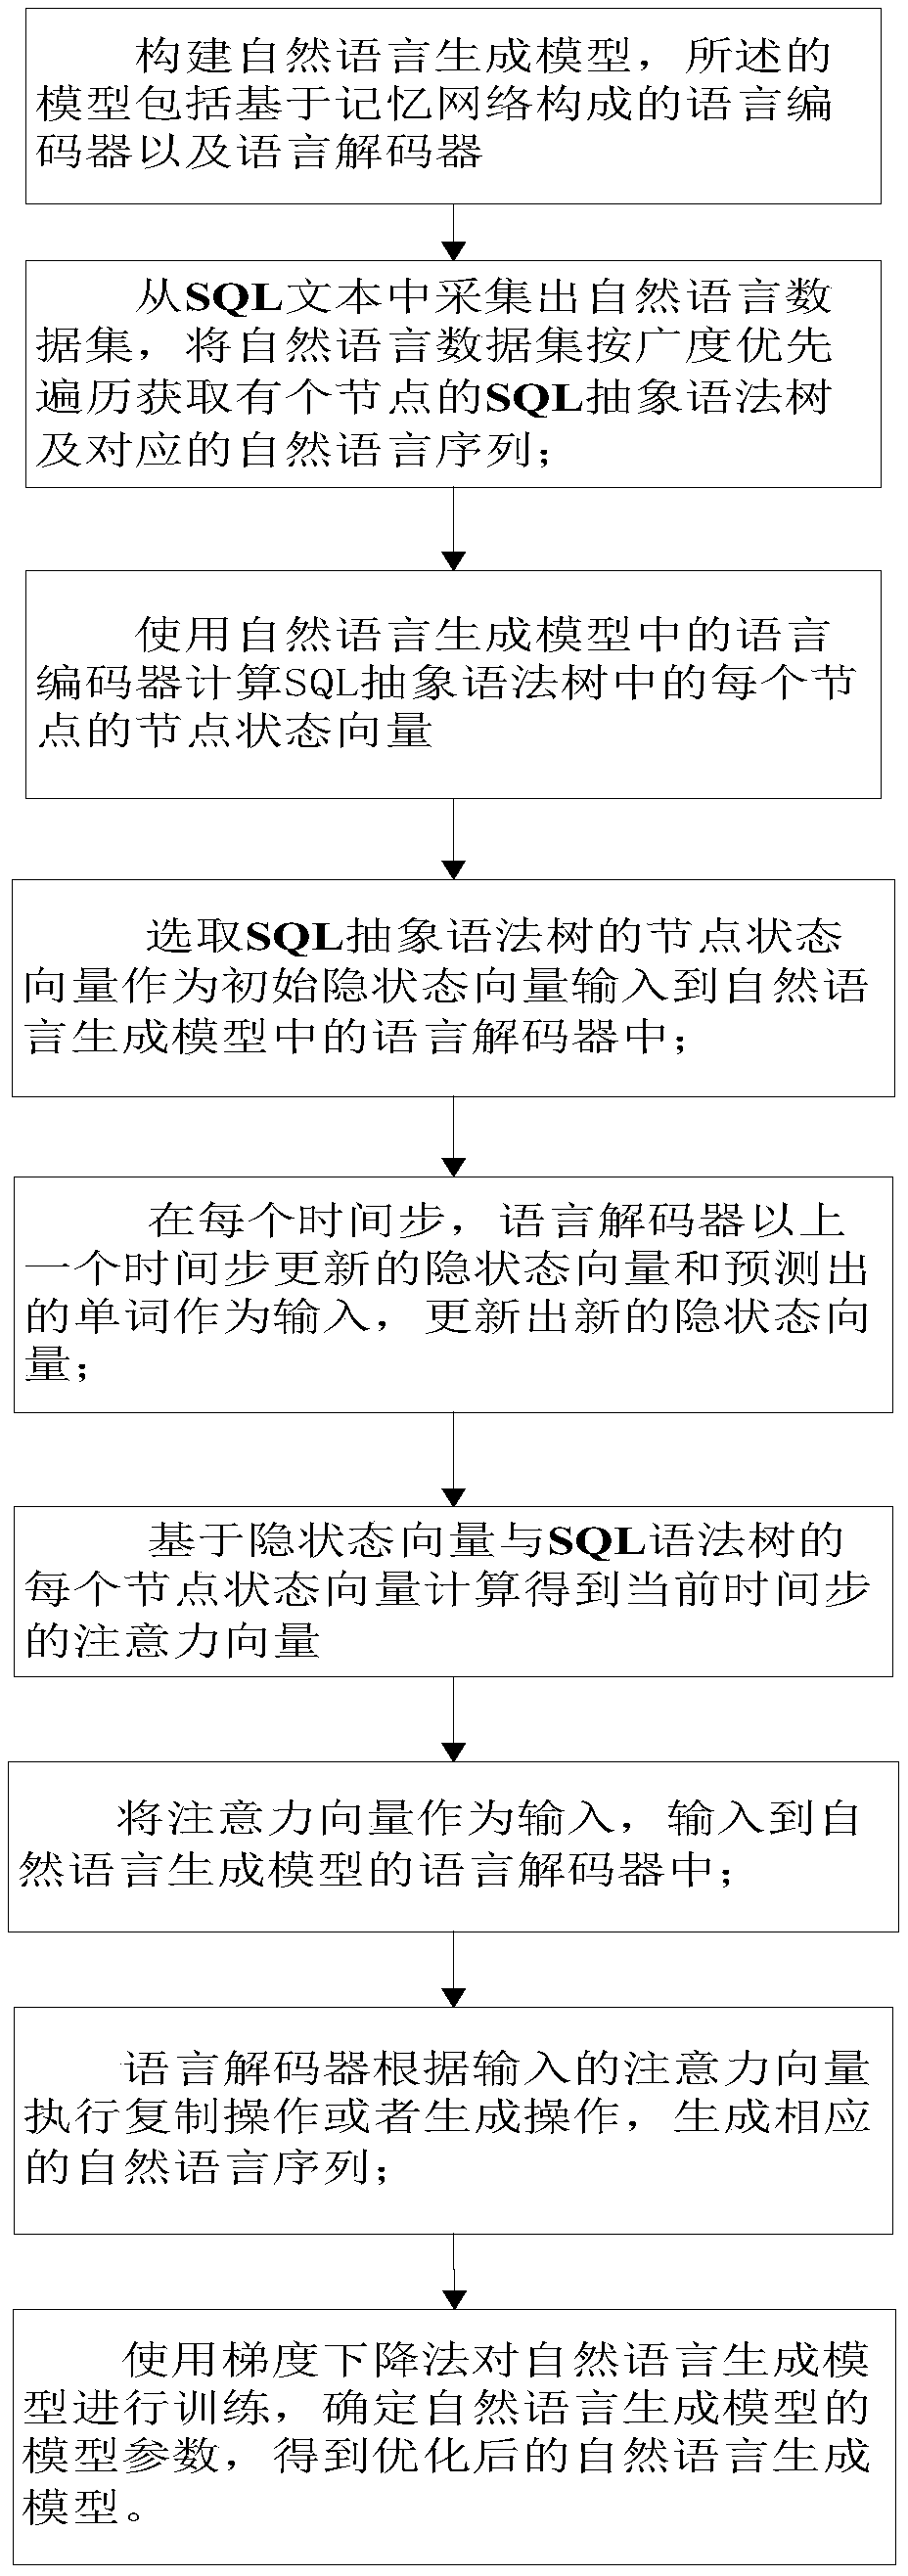 Natural language generation method based on SQL syntax tree node types